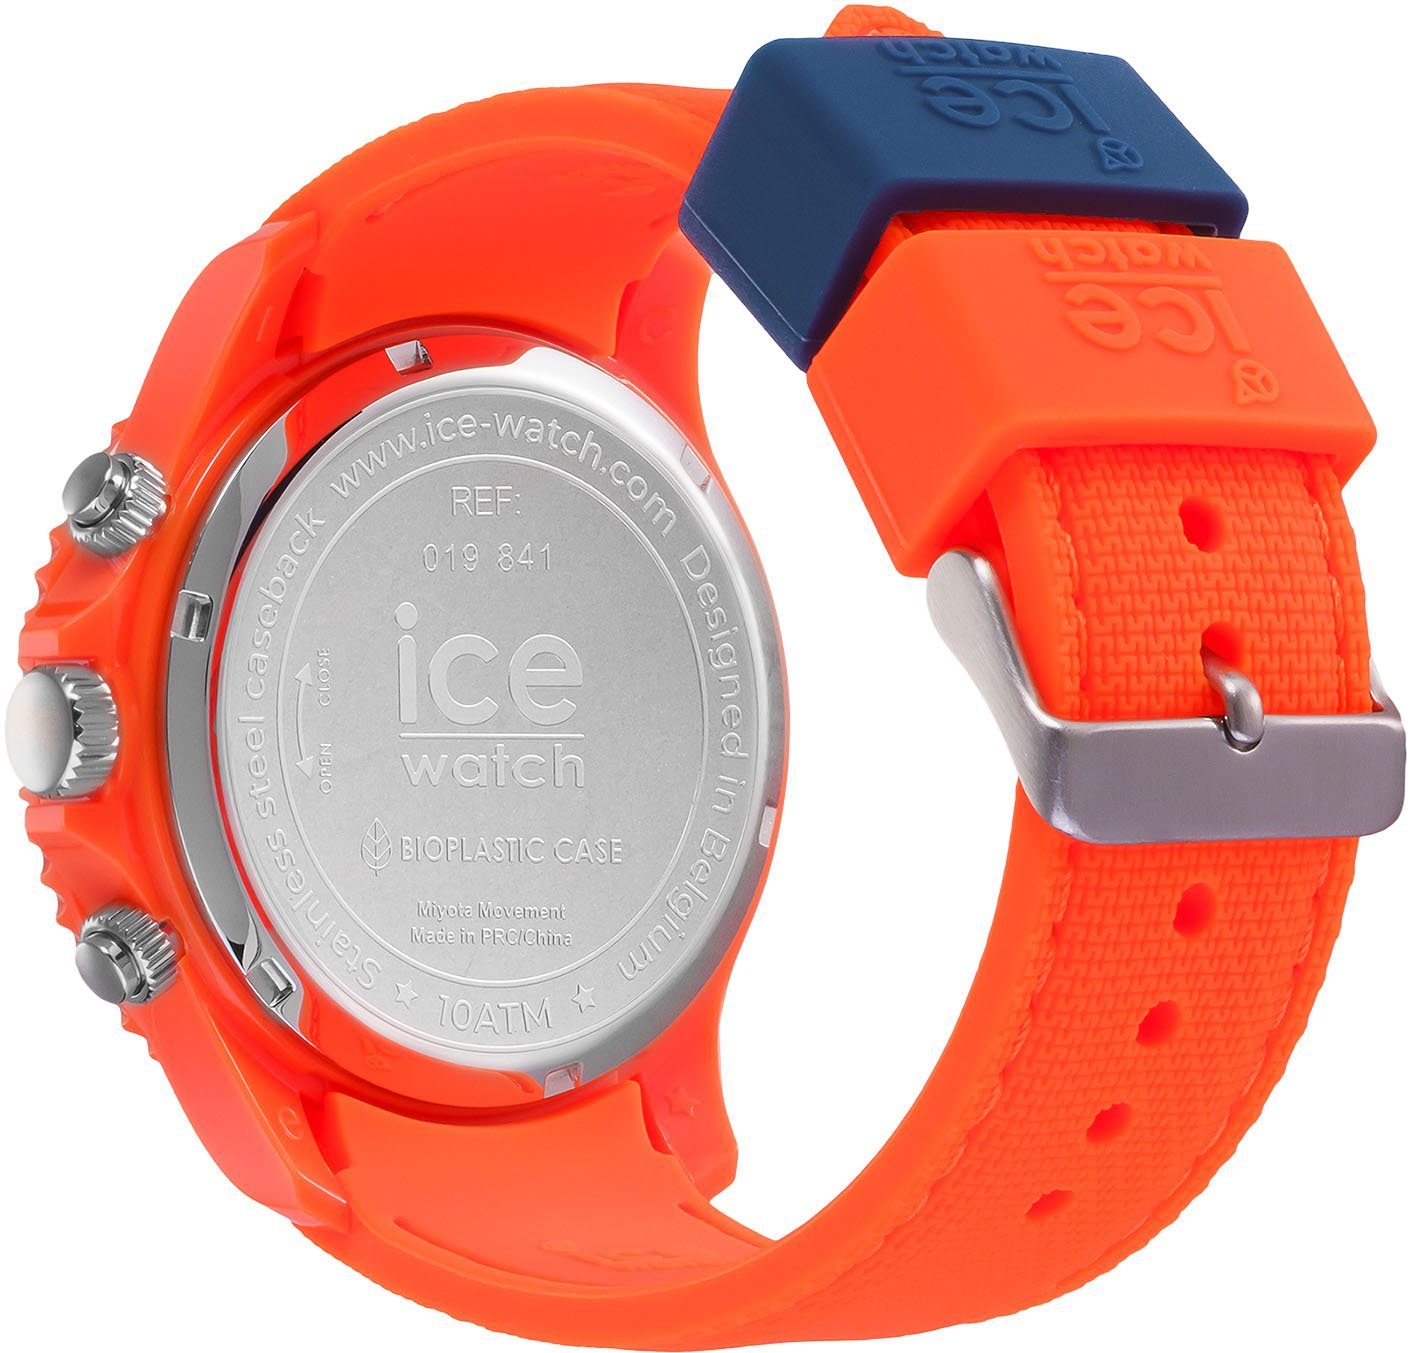 019841 chrono Orange ICE - CH, ice-watch Chronograph - Large - blue